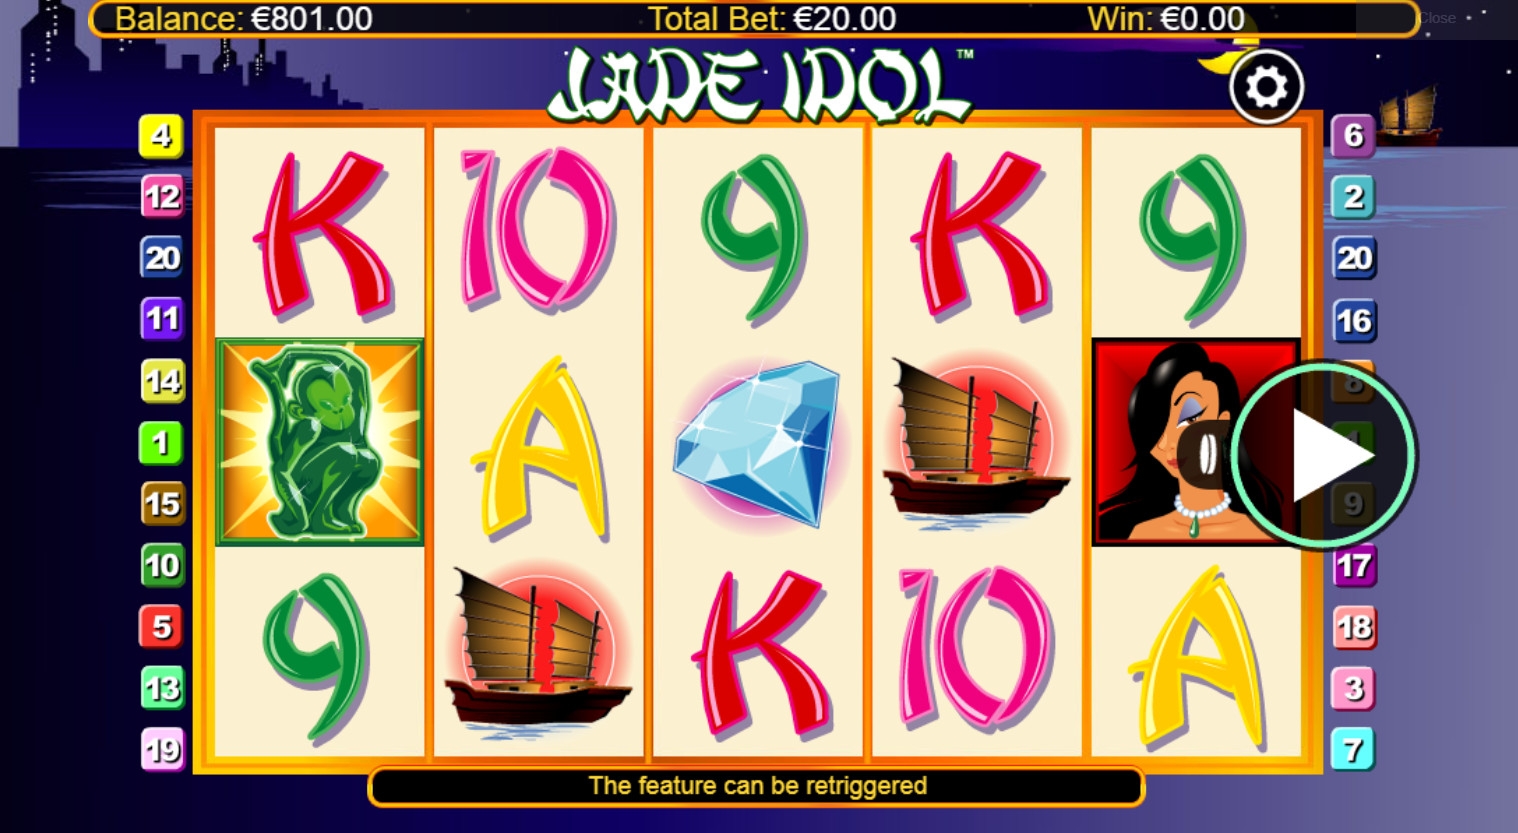 Jade Idol (Jade Idol) from category Slots